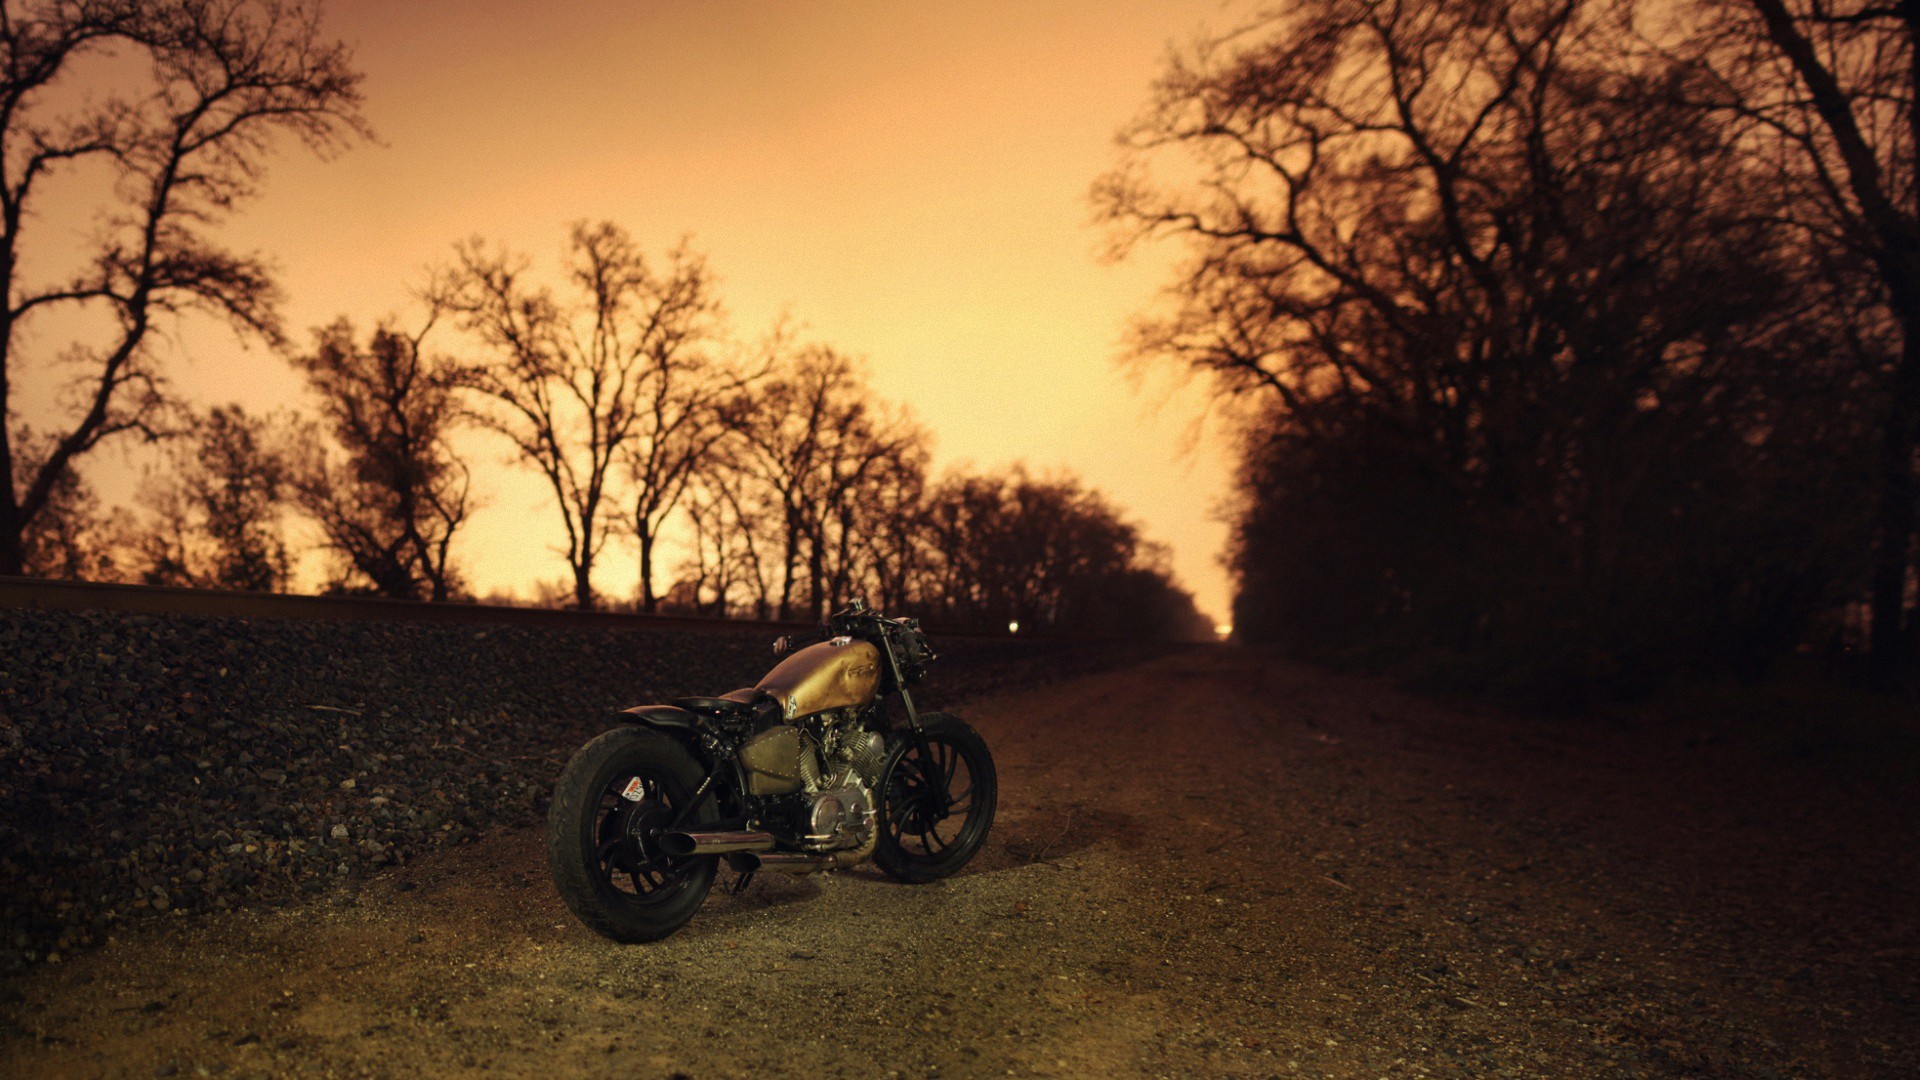 General 1920x1080 motorcycle vehicle Harley-Davidson outdoors sunlight dirt road American motorcycles